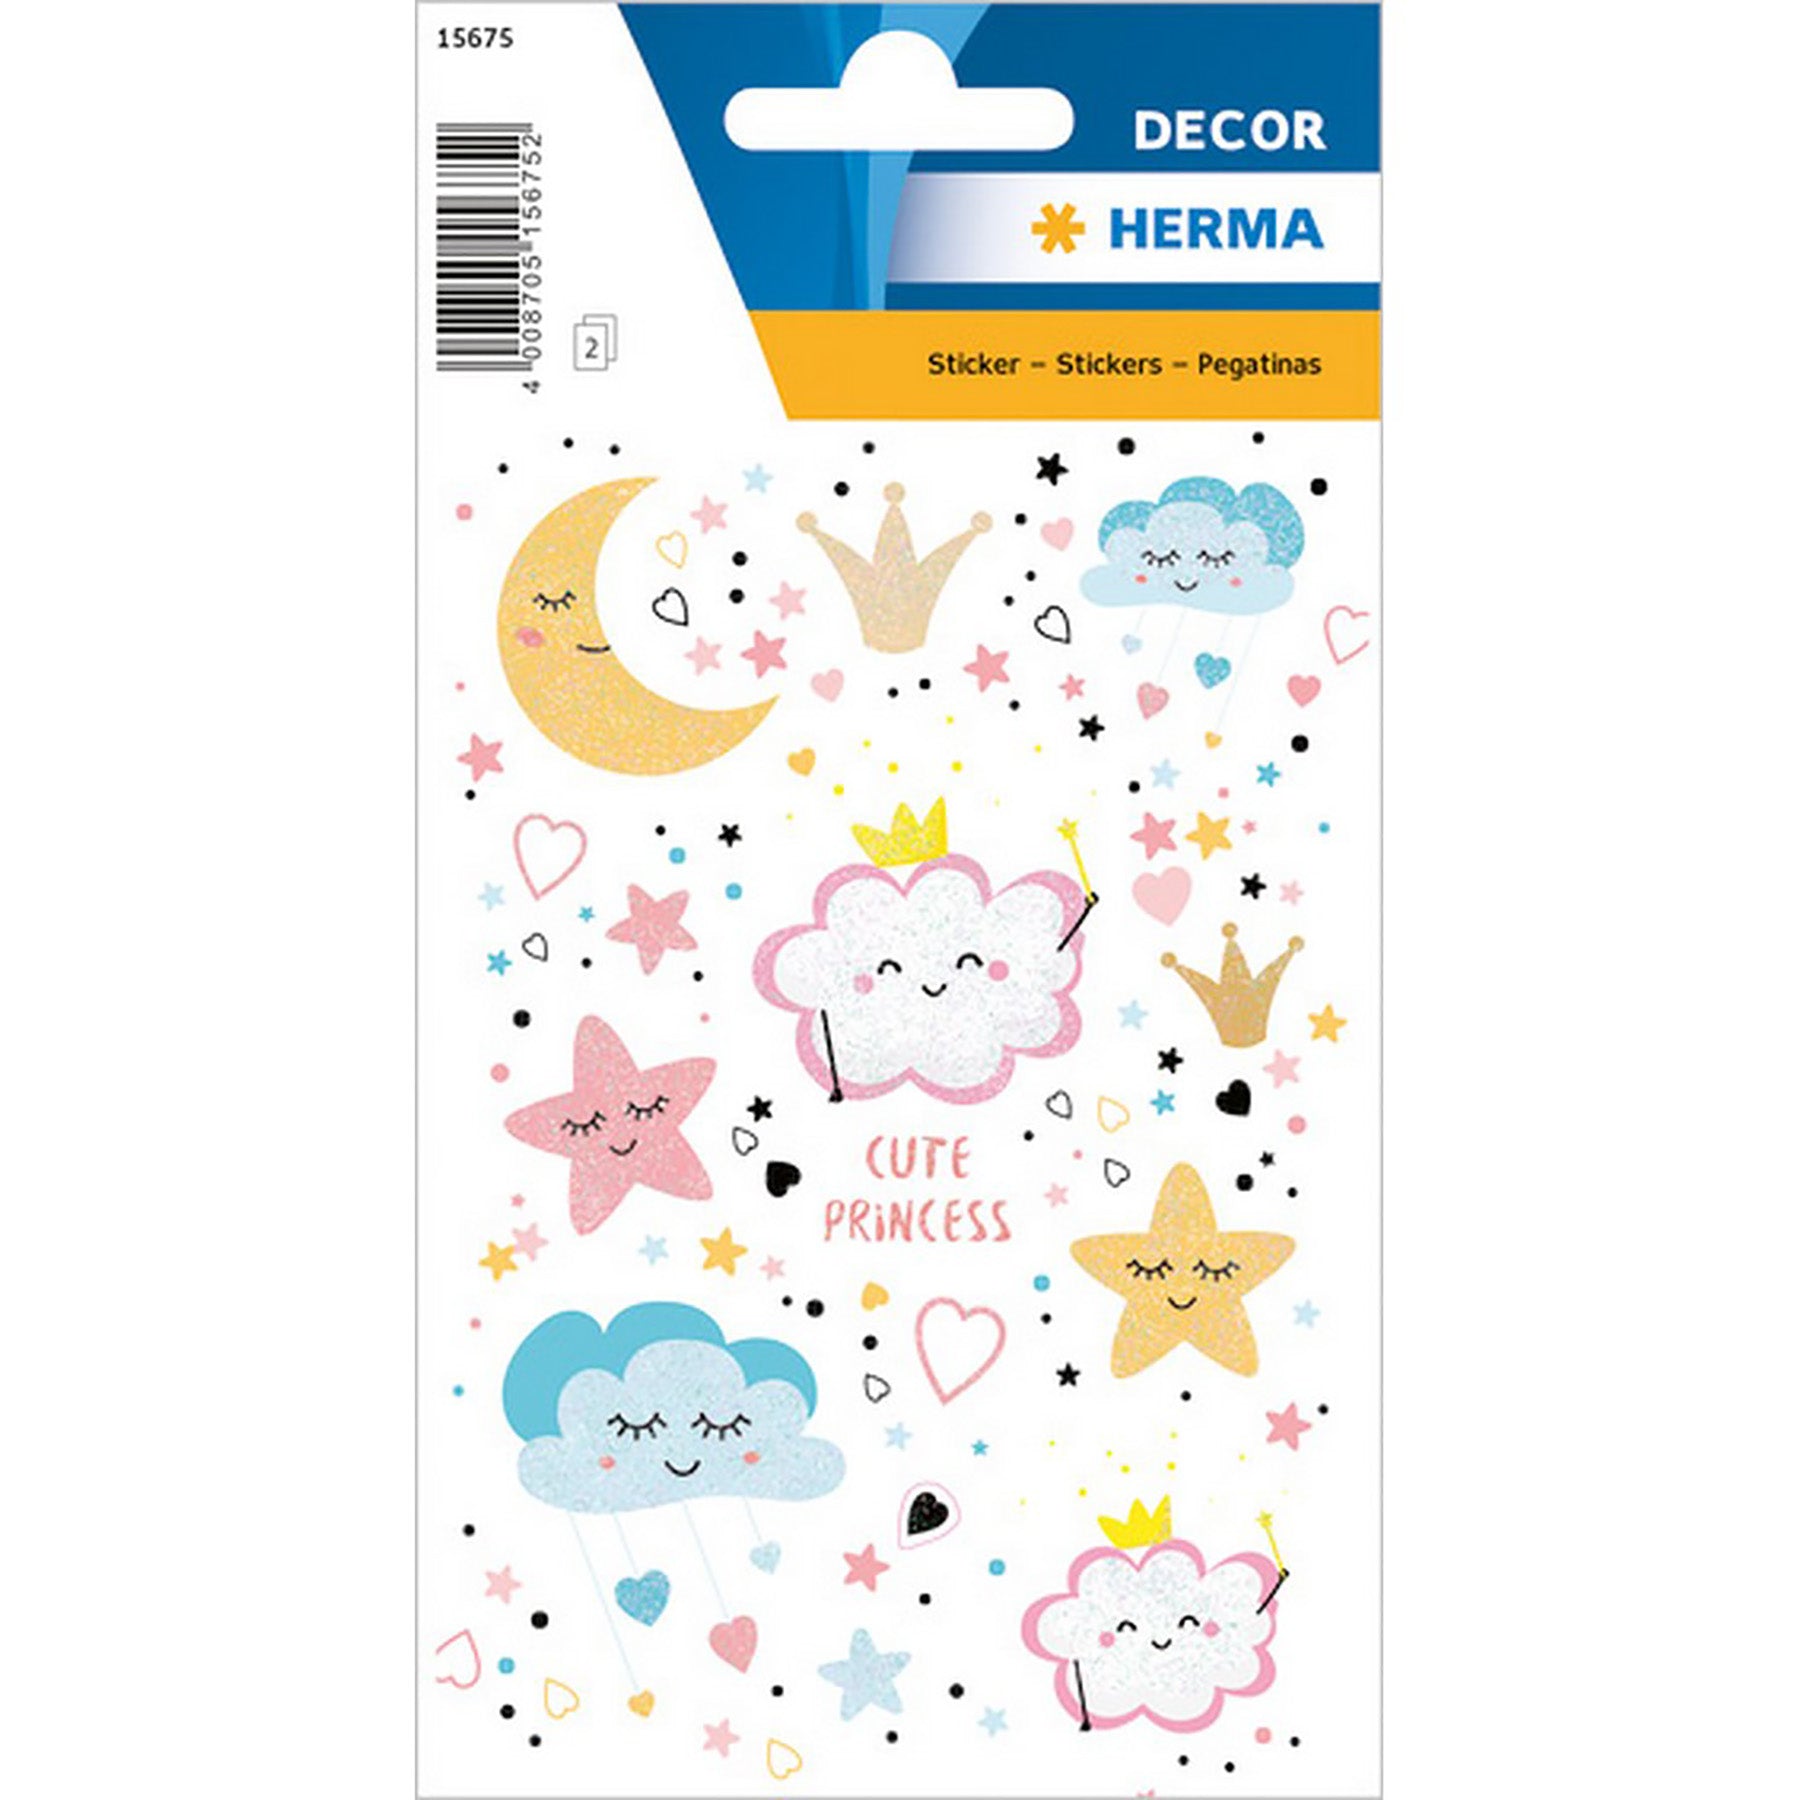 Herma Décor 2 Sheets Stickers Cute Princess Glitter 4.75x3.1in Sheet